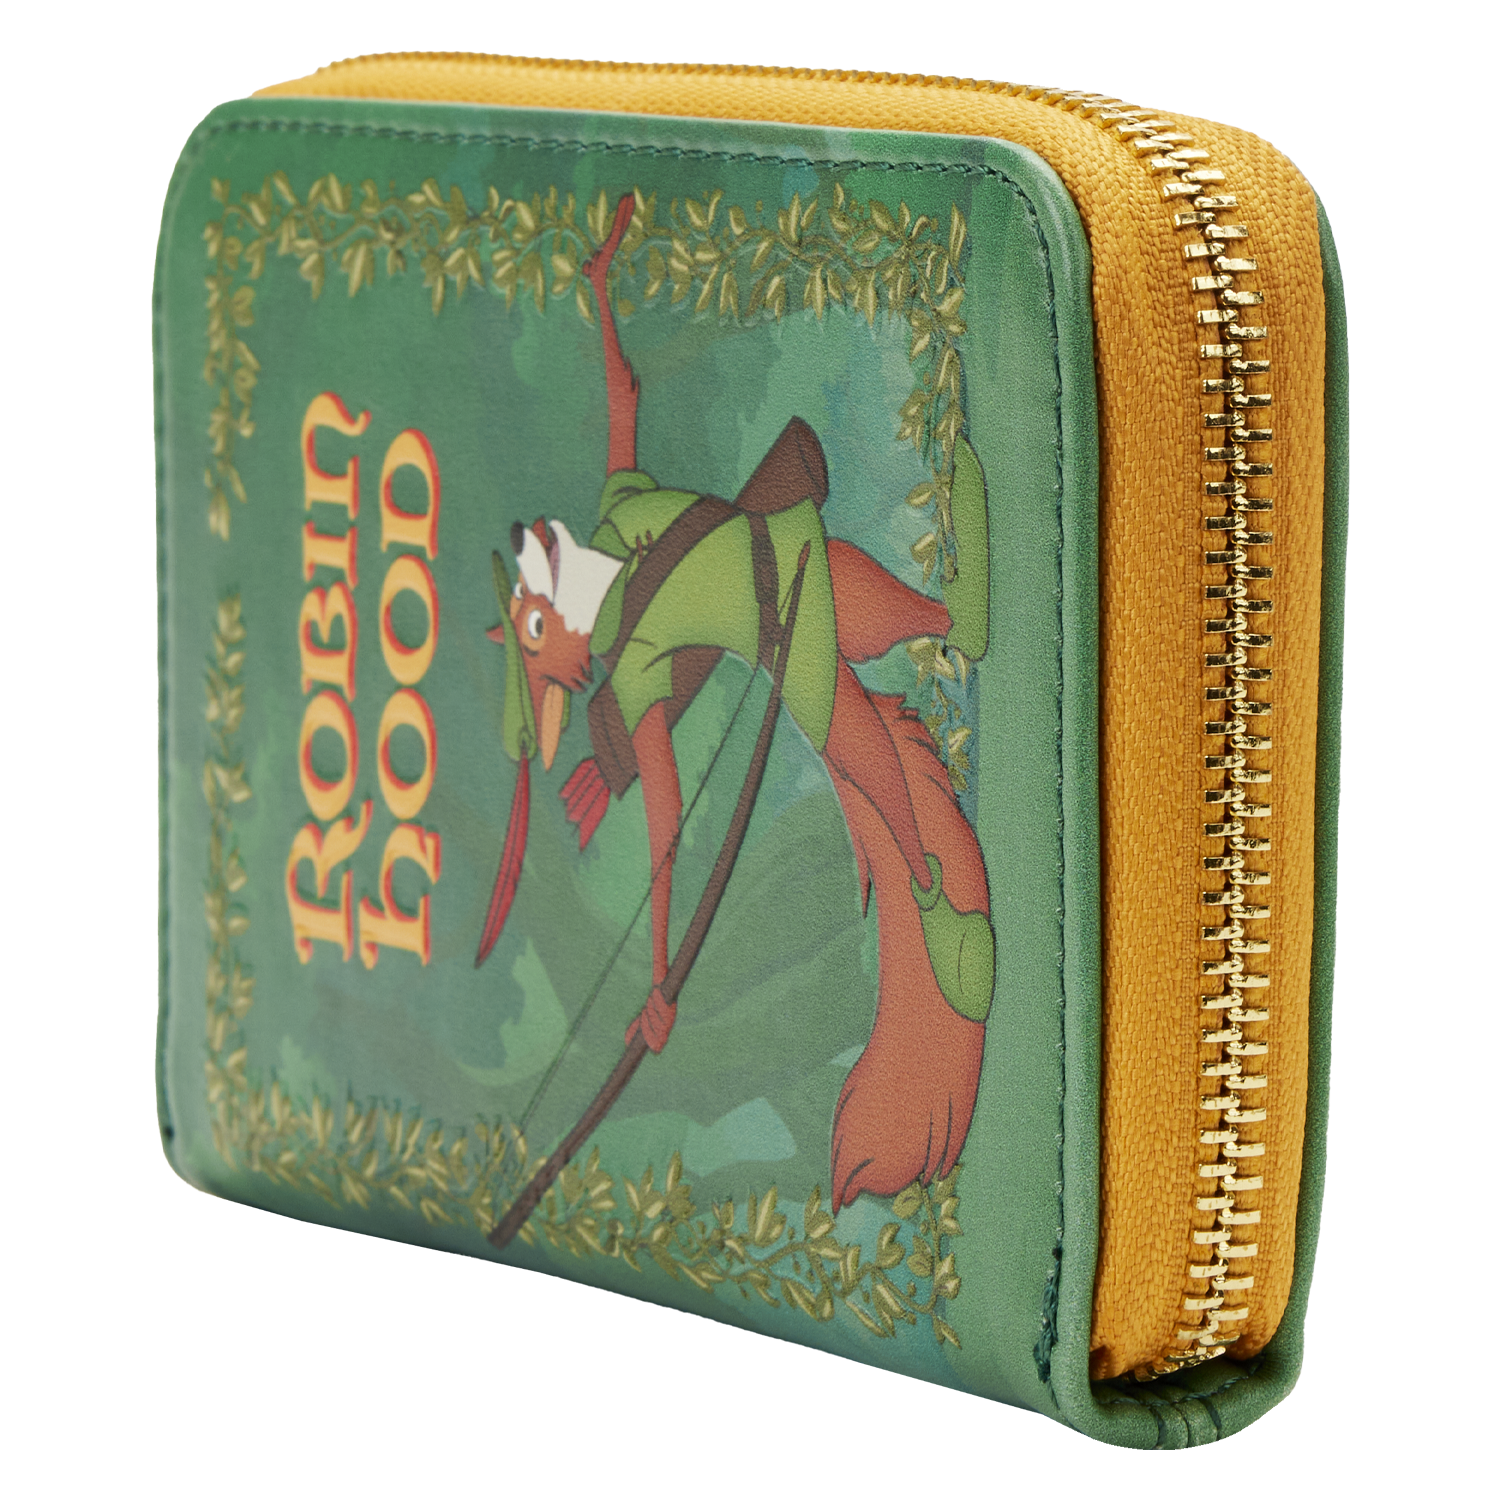 Loungefly Disney Classic Book Robin Hood Ziparound Wallet